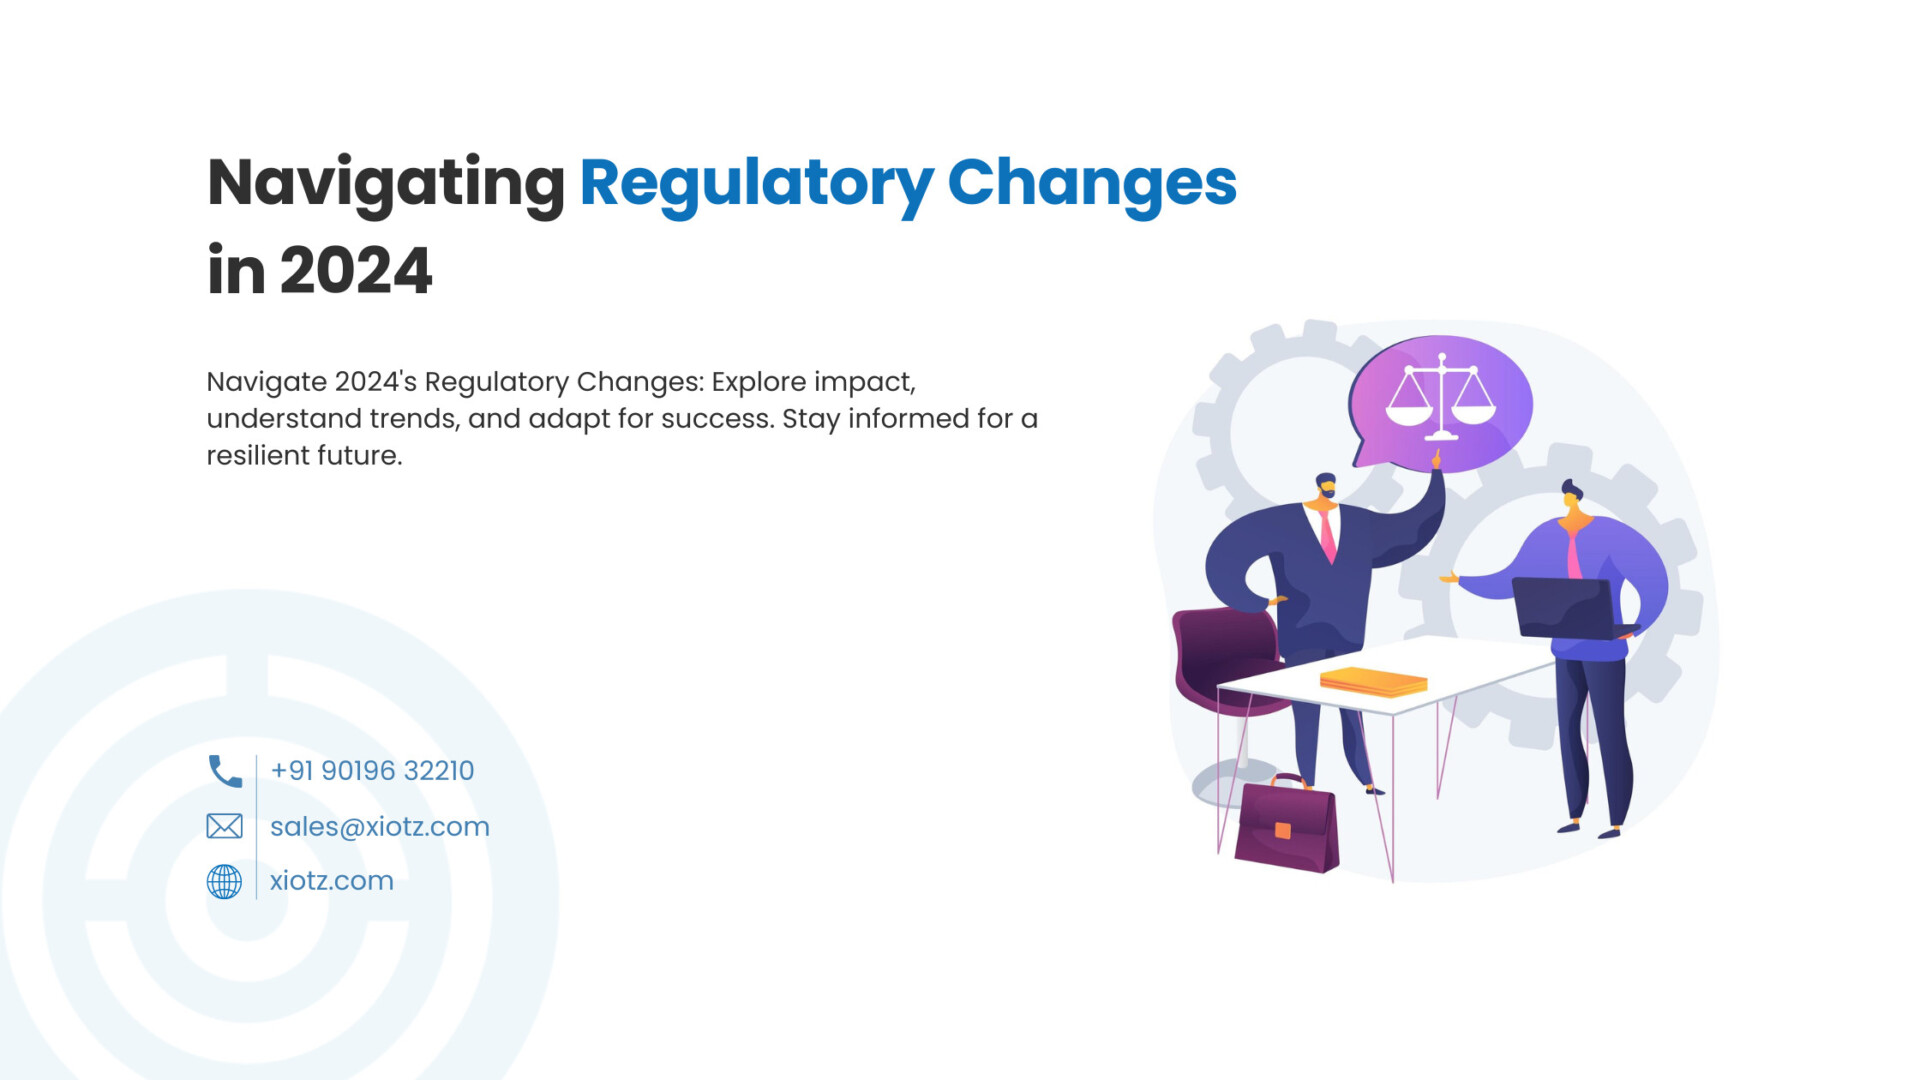 Navigating Regulatory Changes in 2024